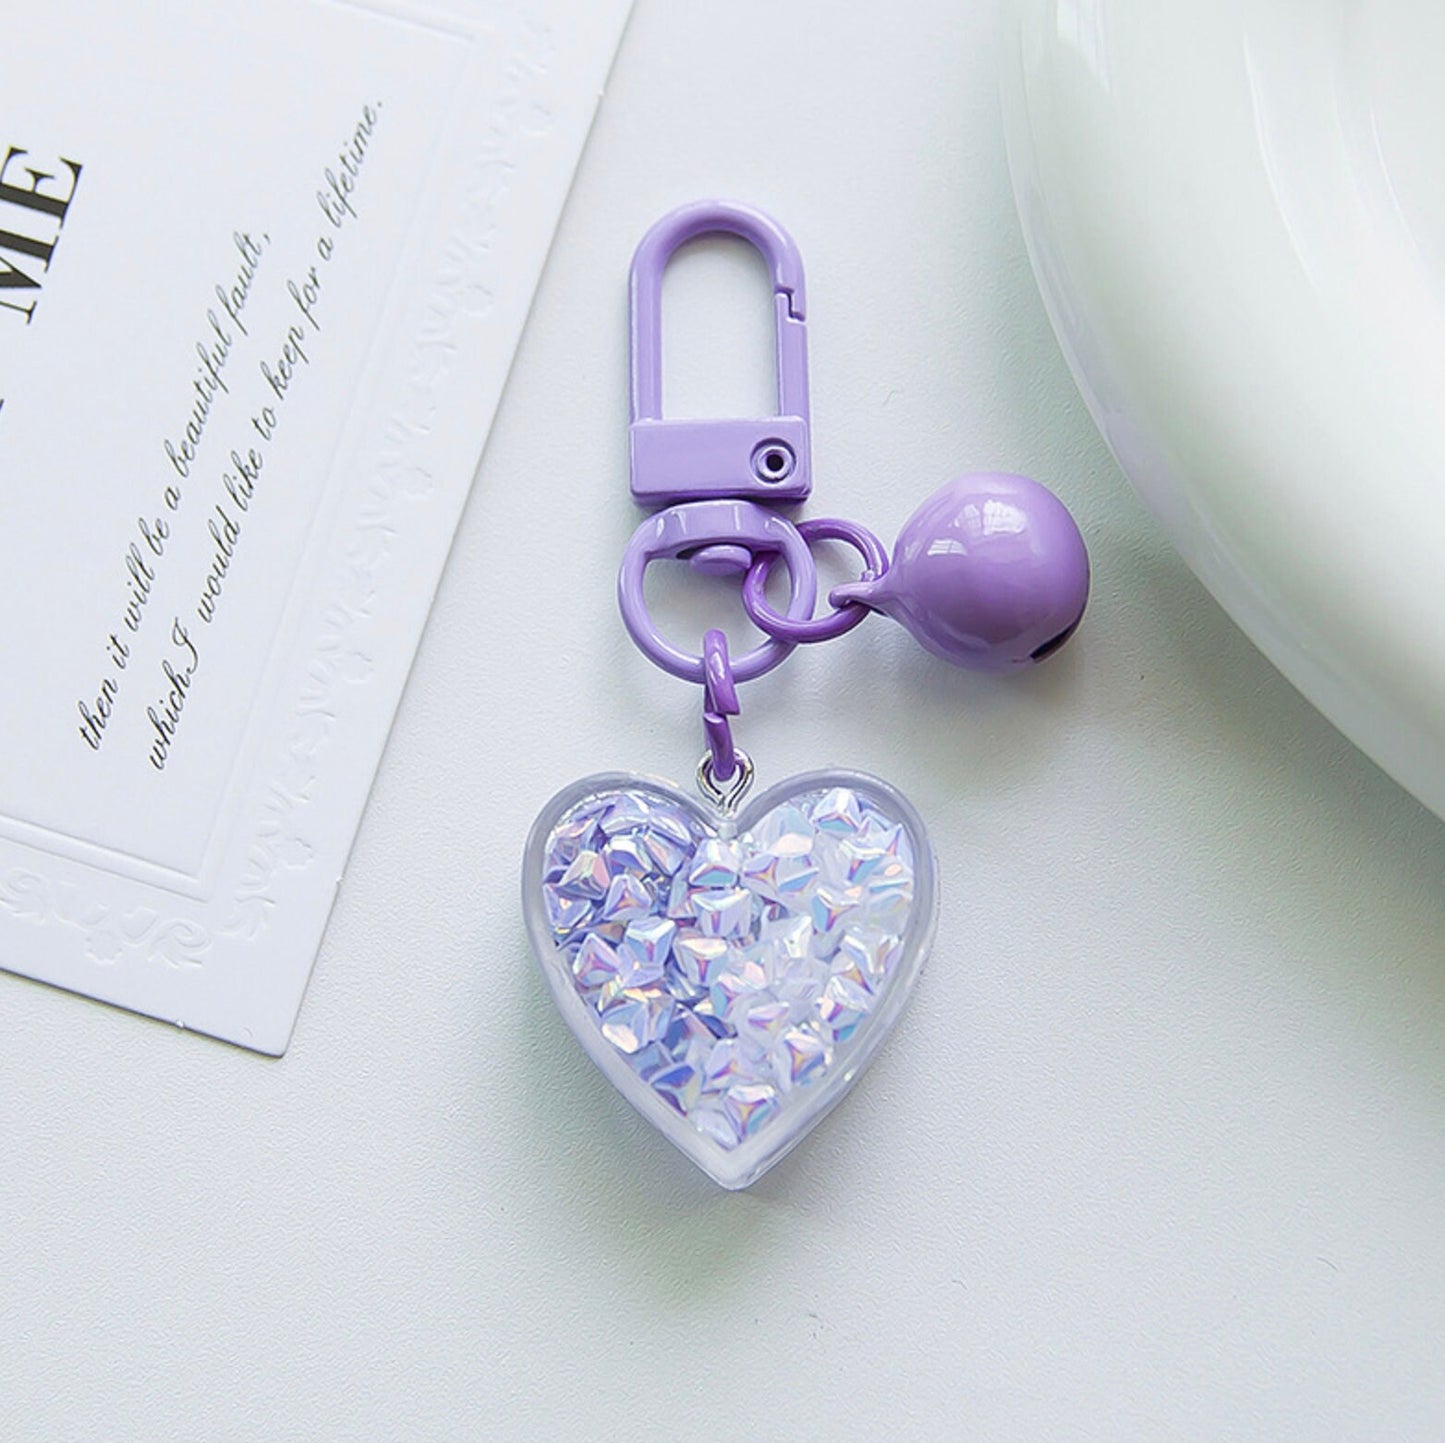 Cute Acrylic Shattered Heart Charm Themed Keychain, Key ring